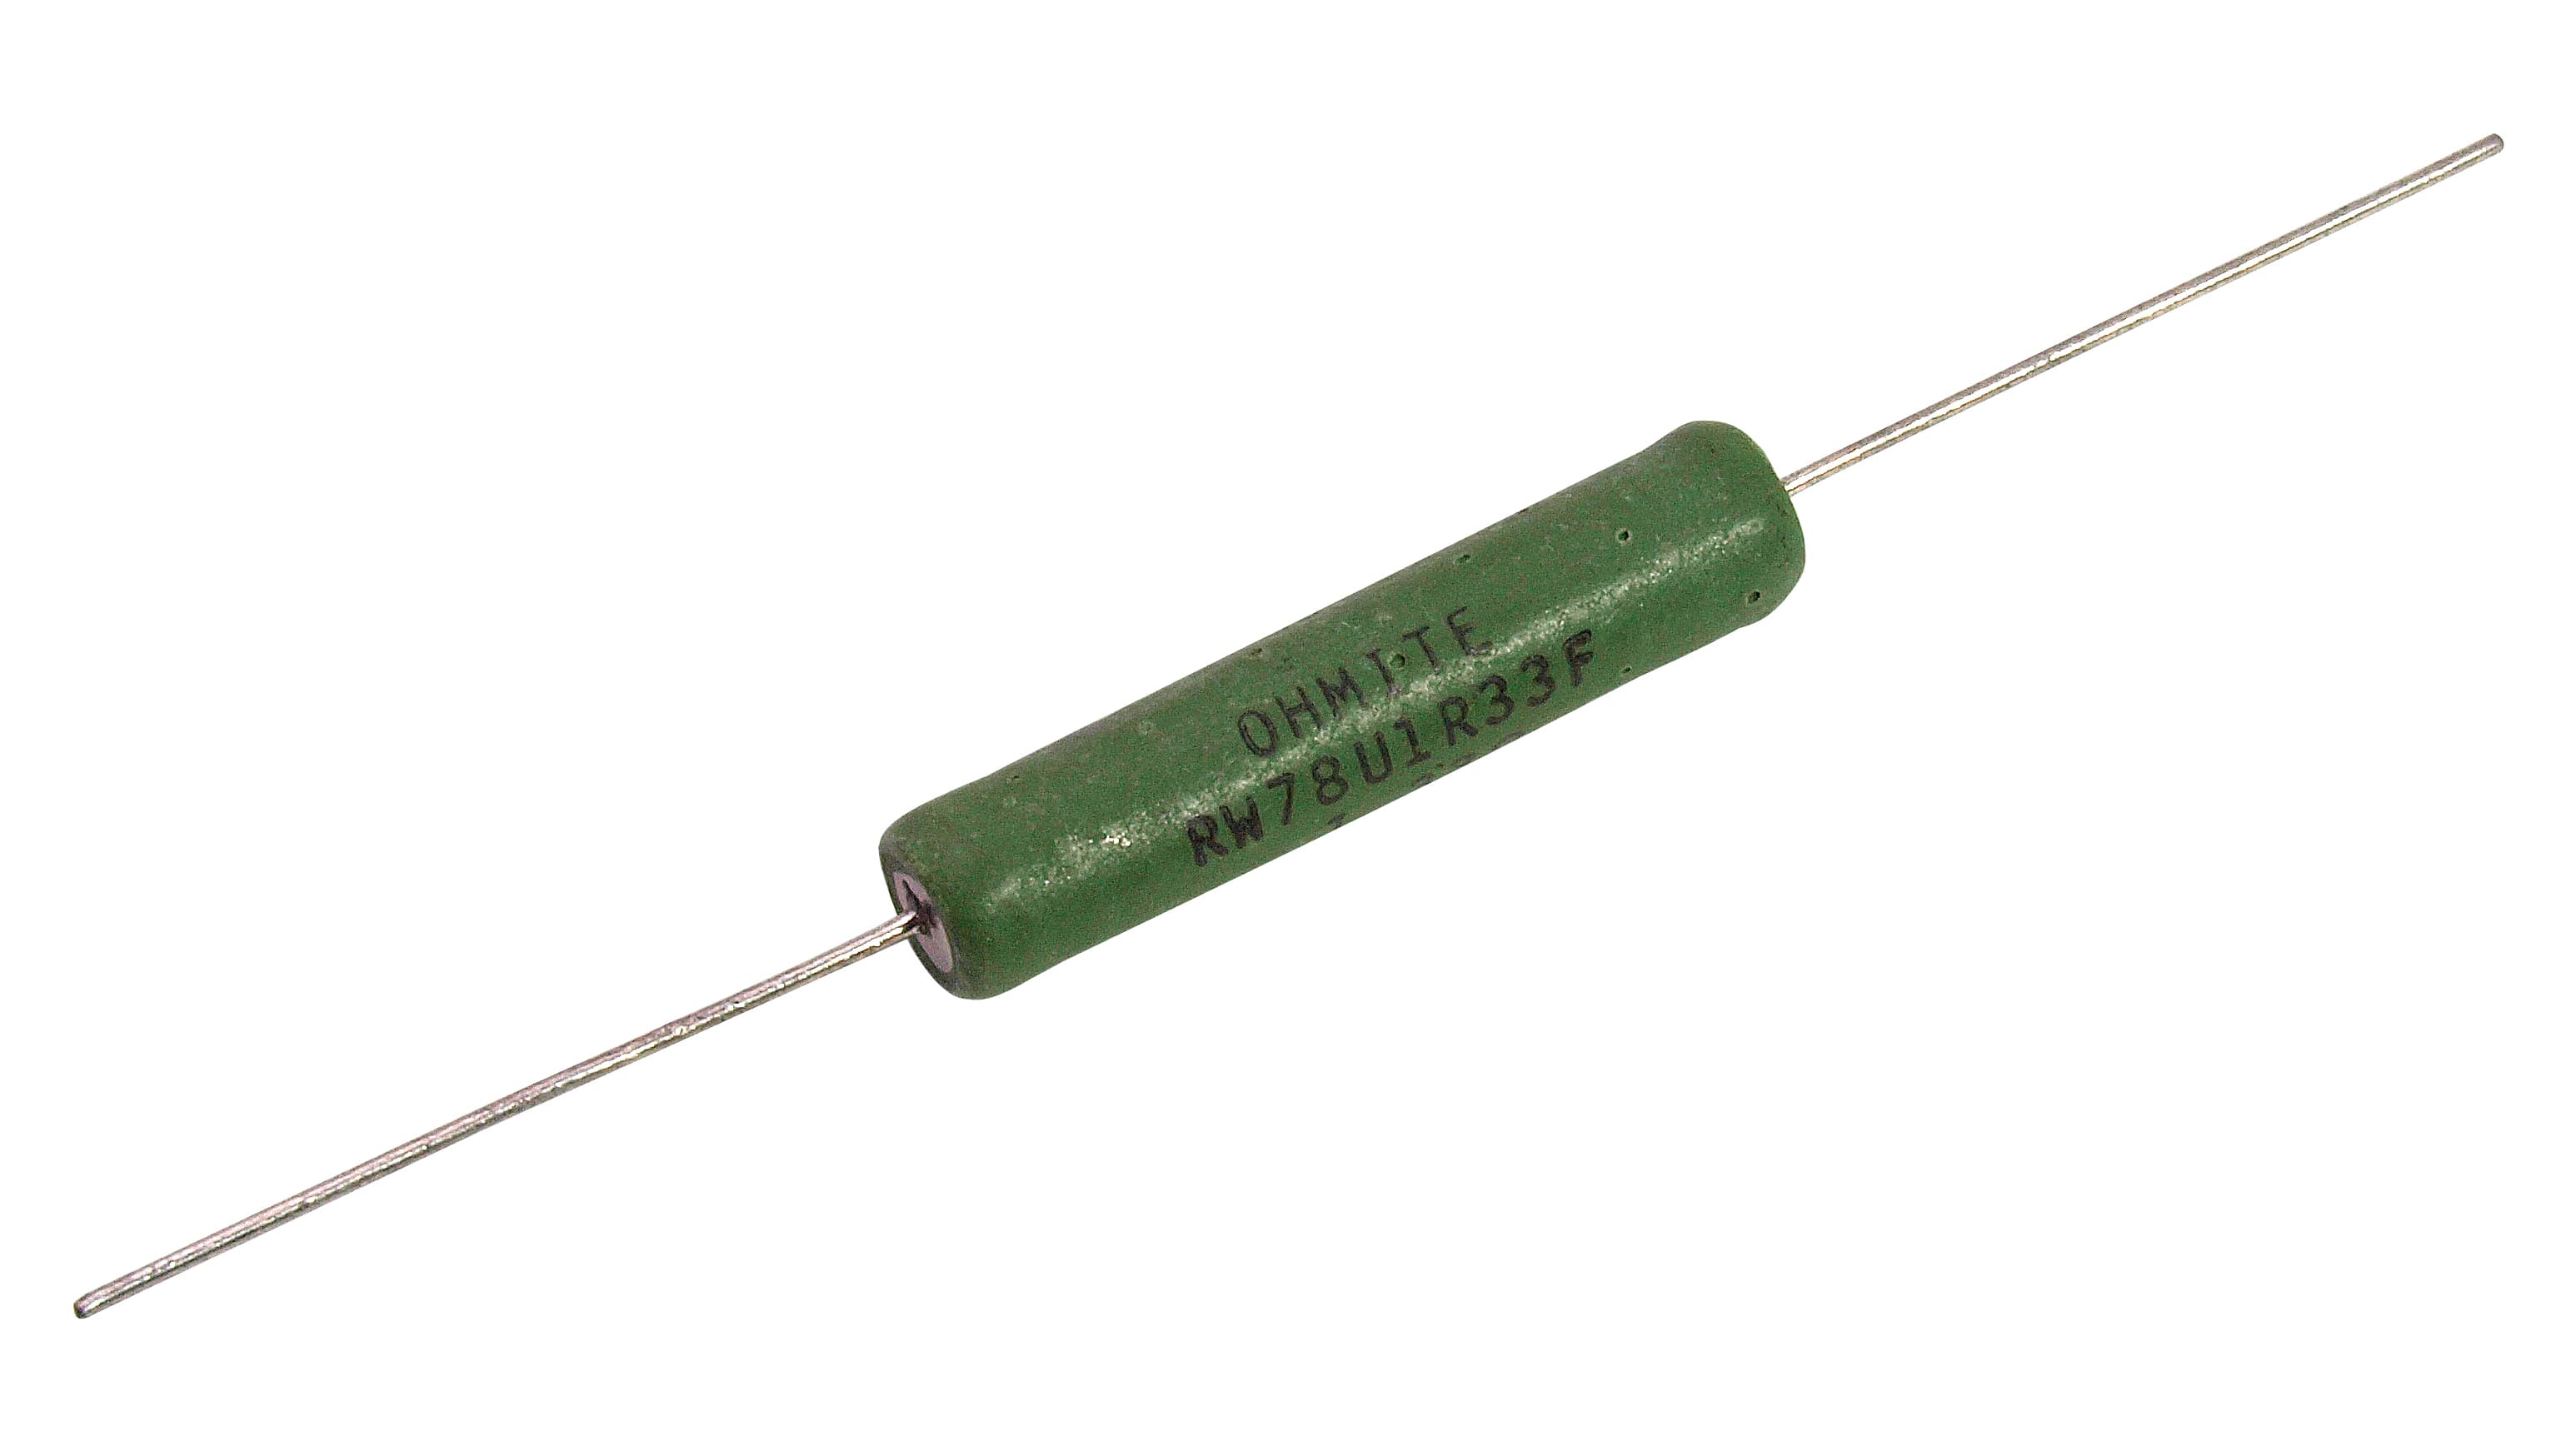 1 5 Pack TRW BWH Molded Wirewound .68 OHM 1 Watt 10% Resistors NOS 